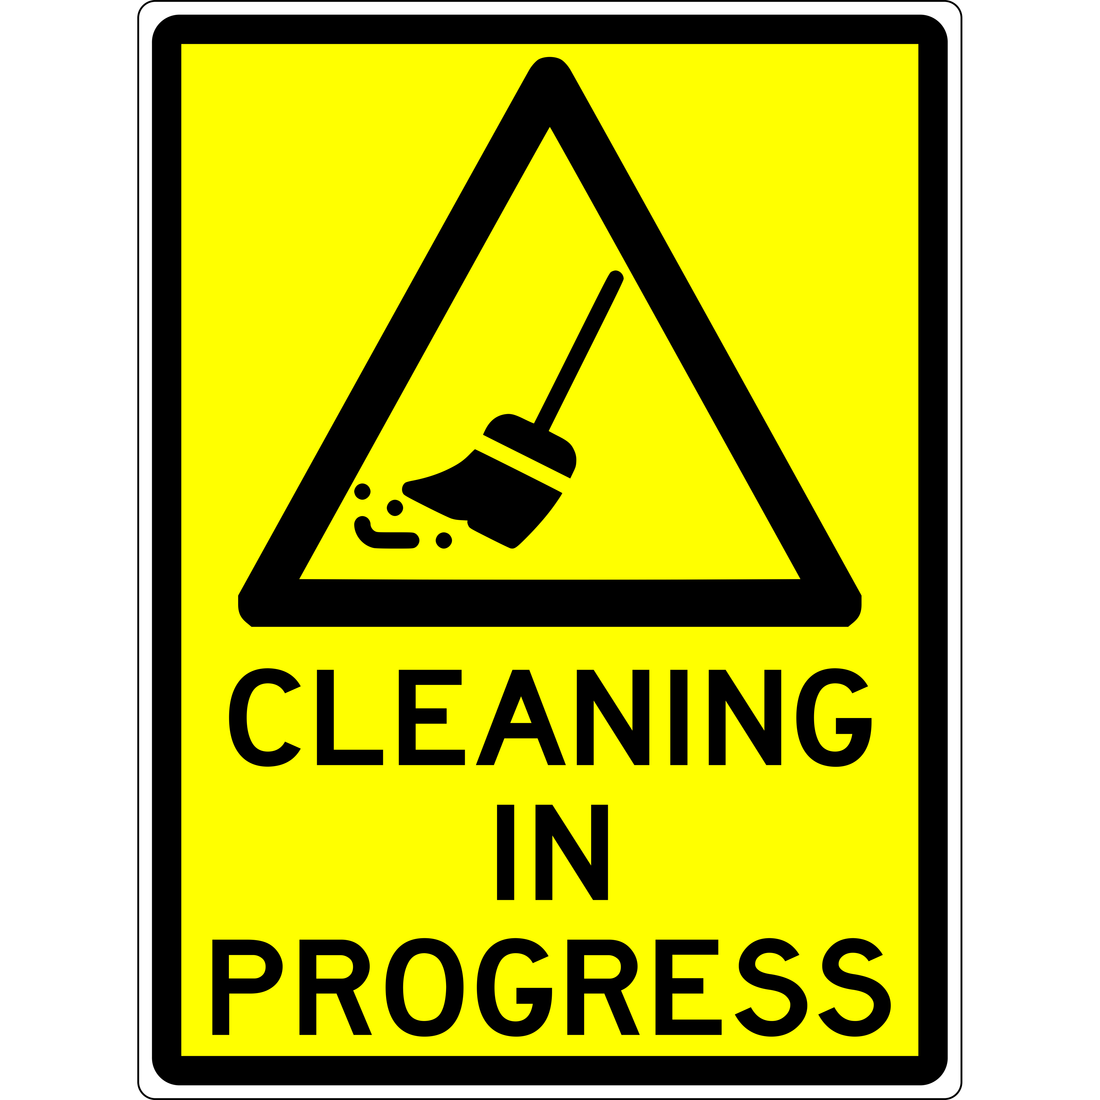 WARNING - CLEANING IN PROGRESS